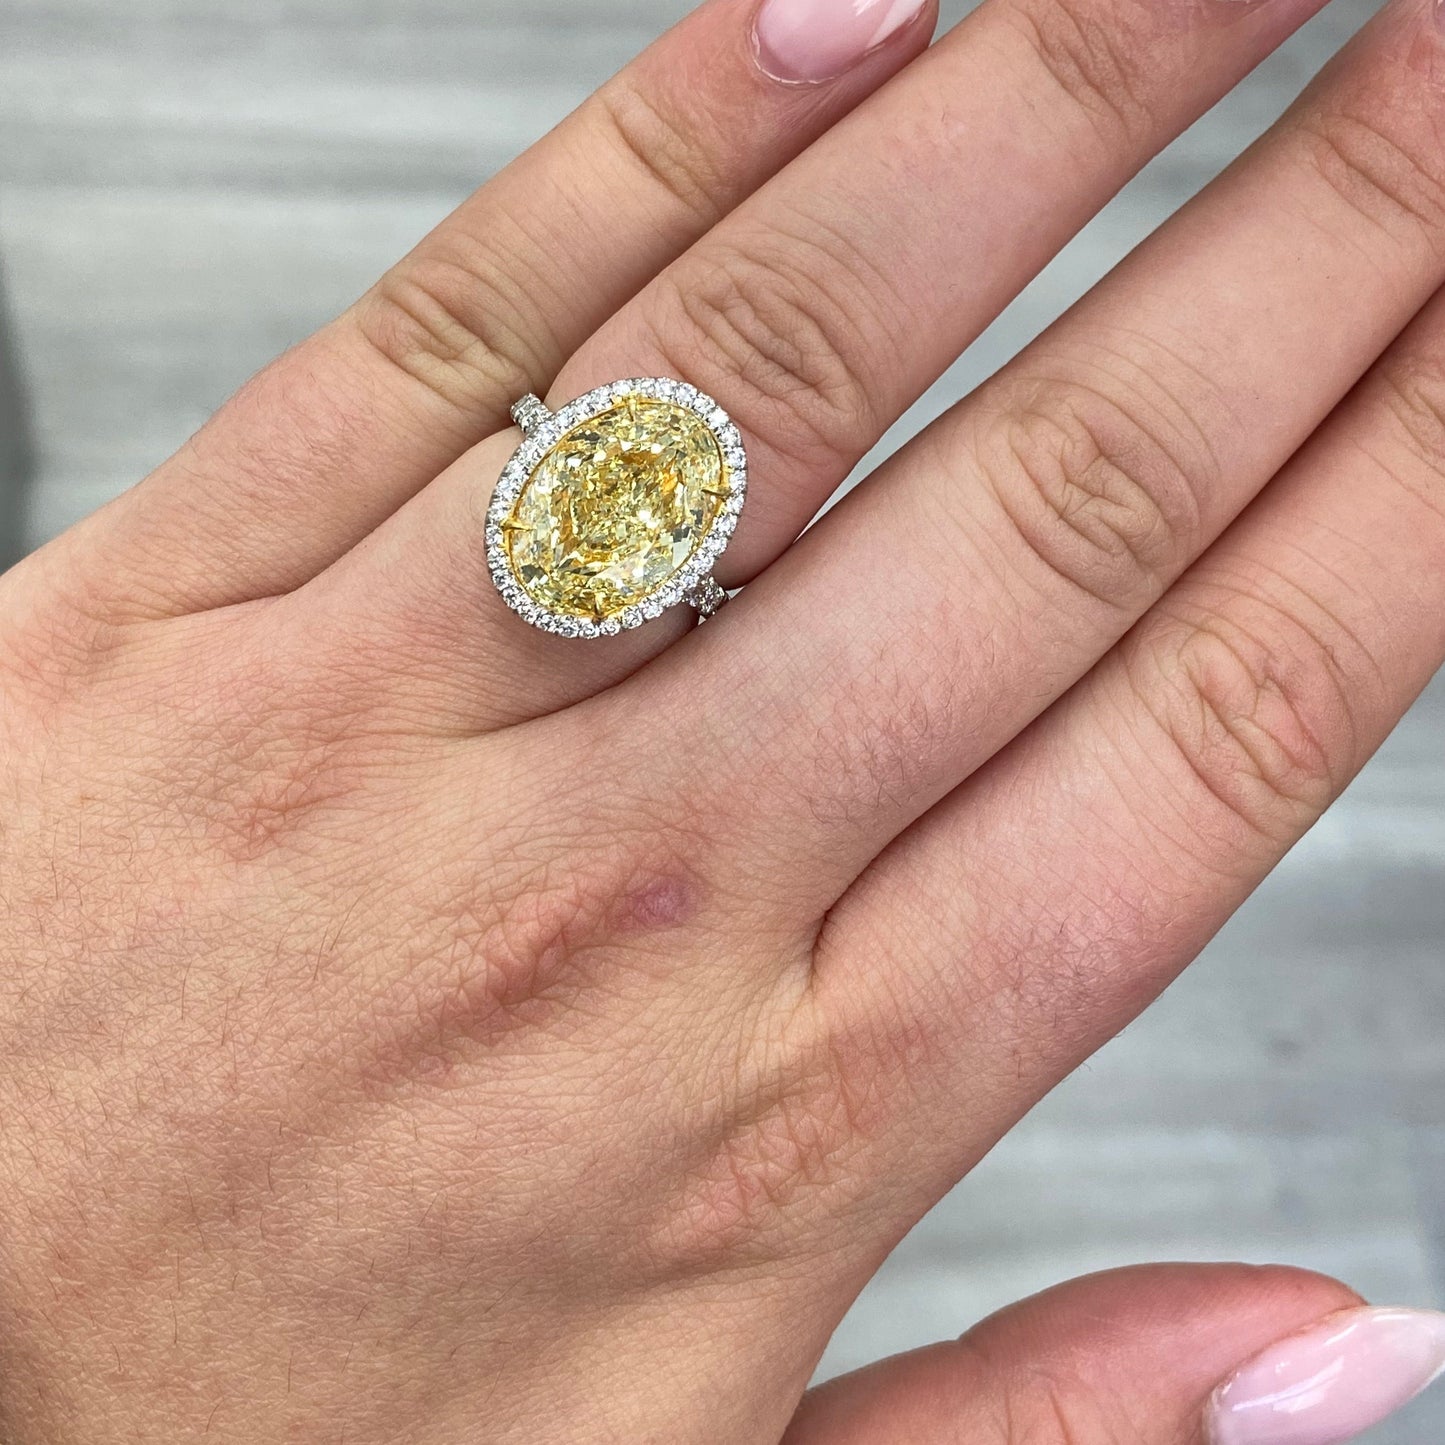 7 carat light yellow oval diamond ring